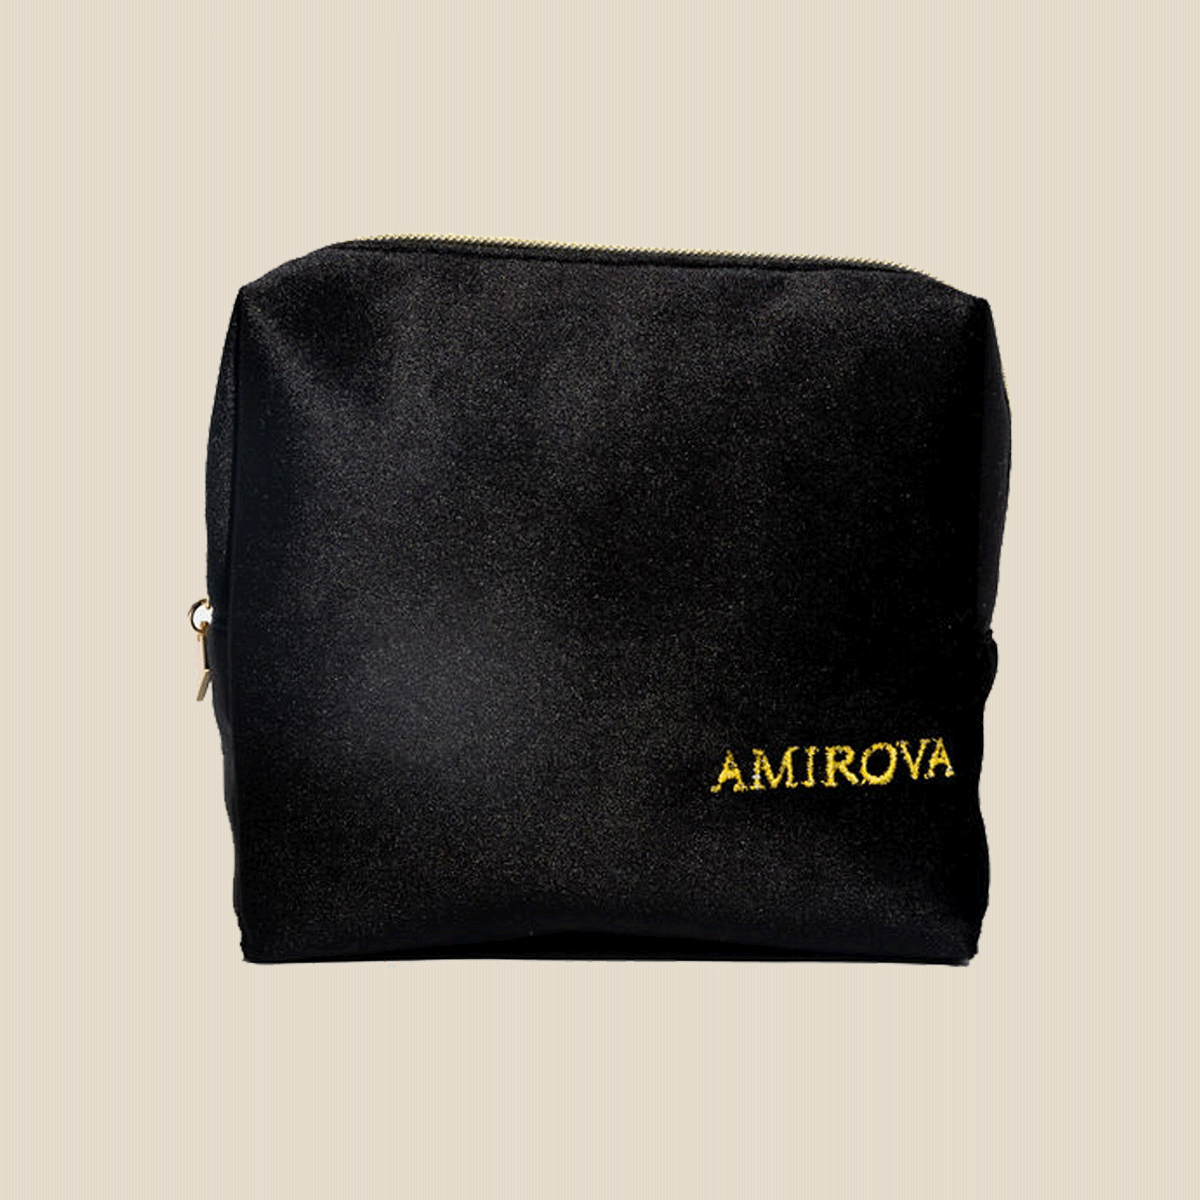 Amirova Cosmetic Bag